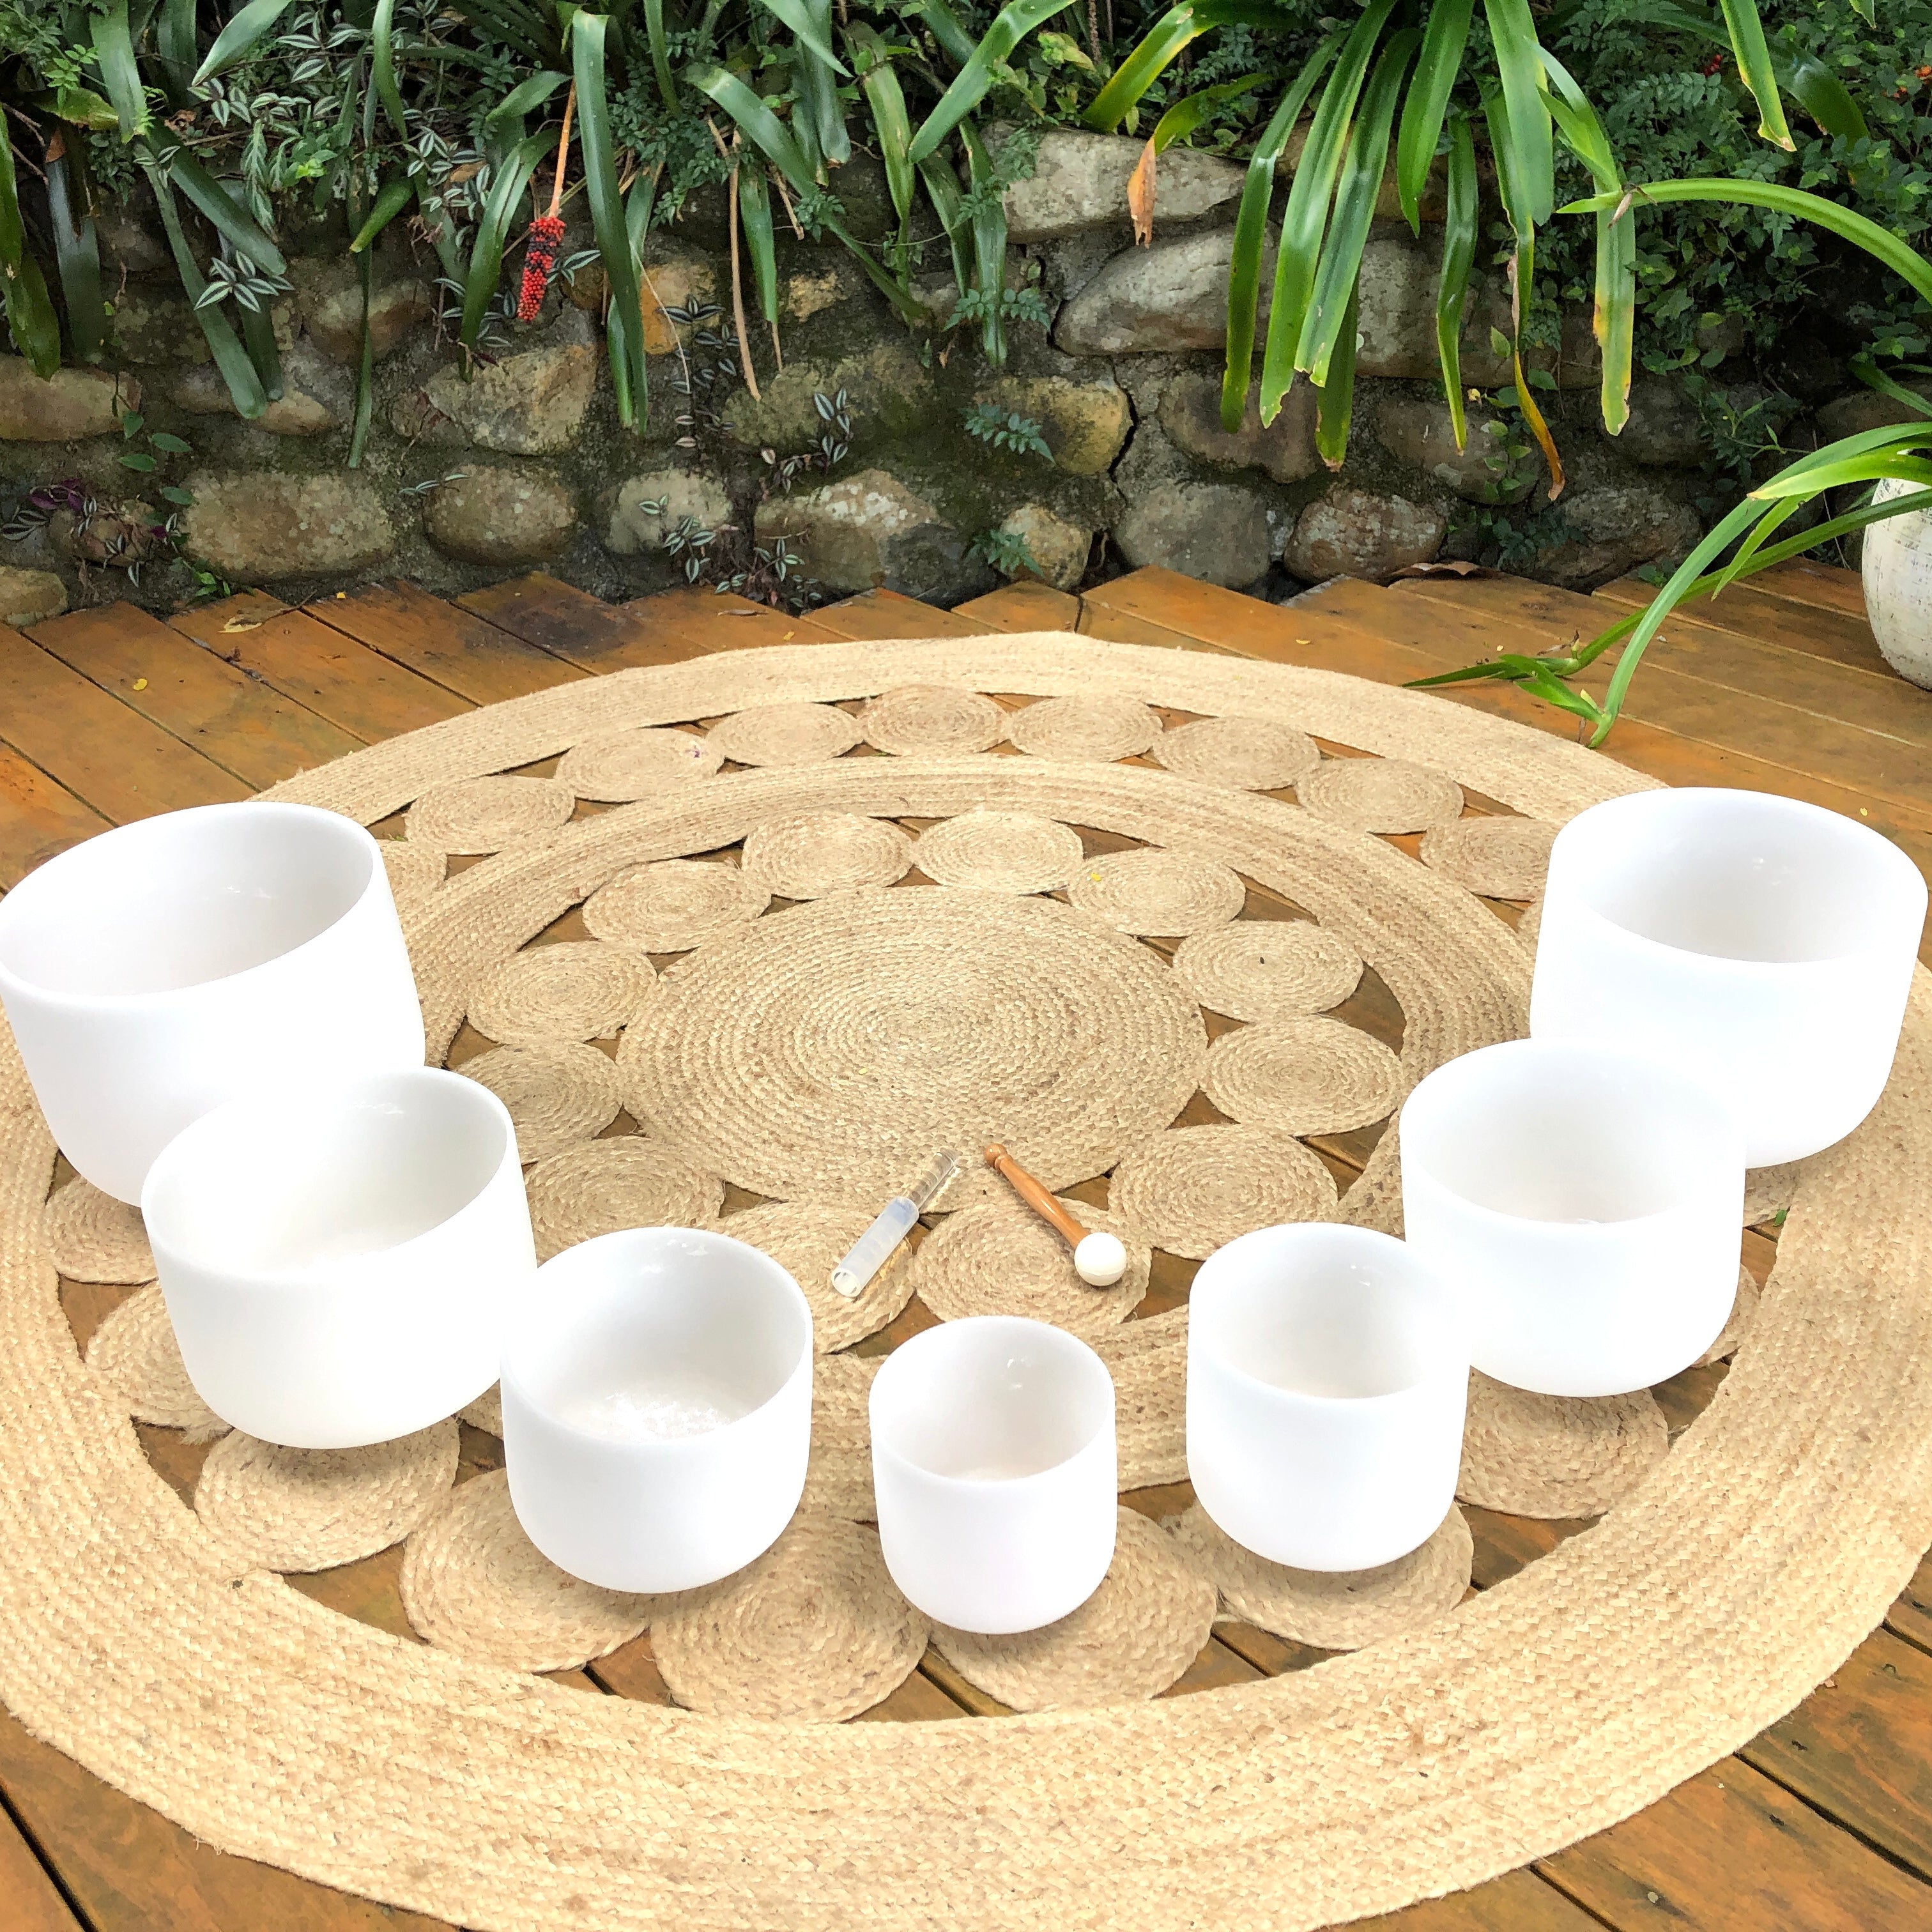 White sound healing bowls